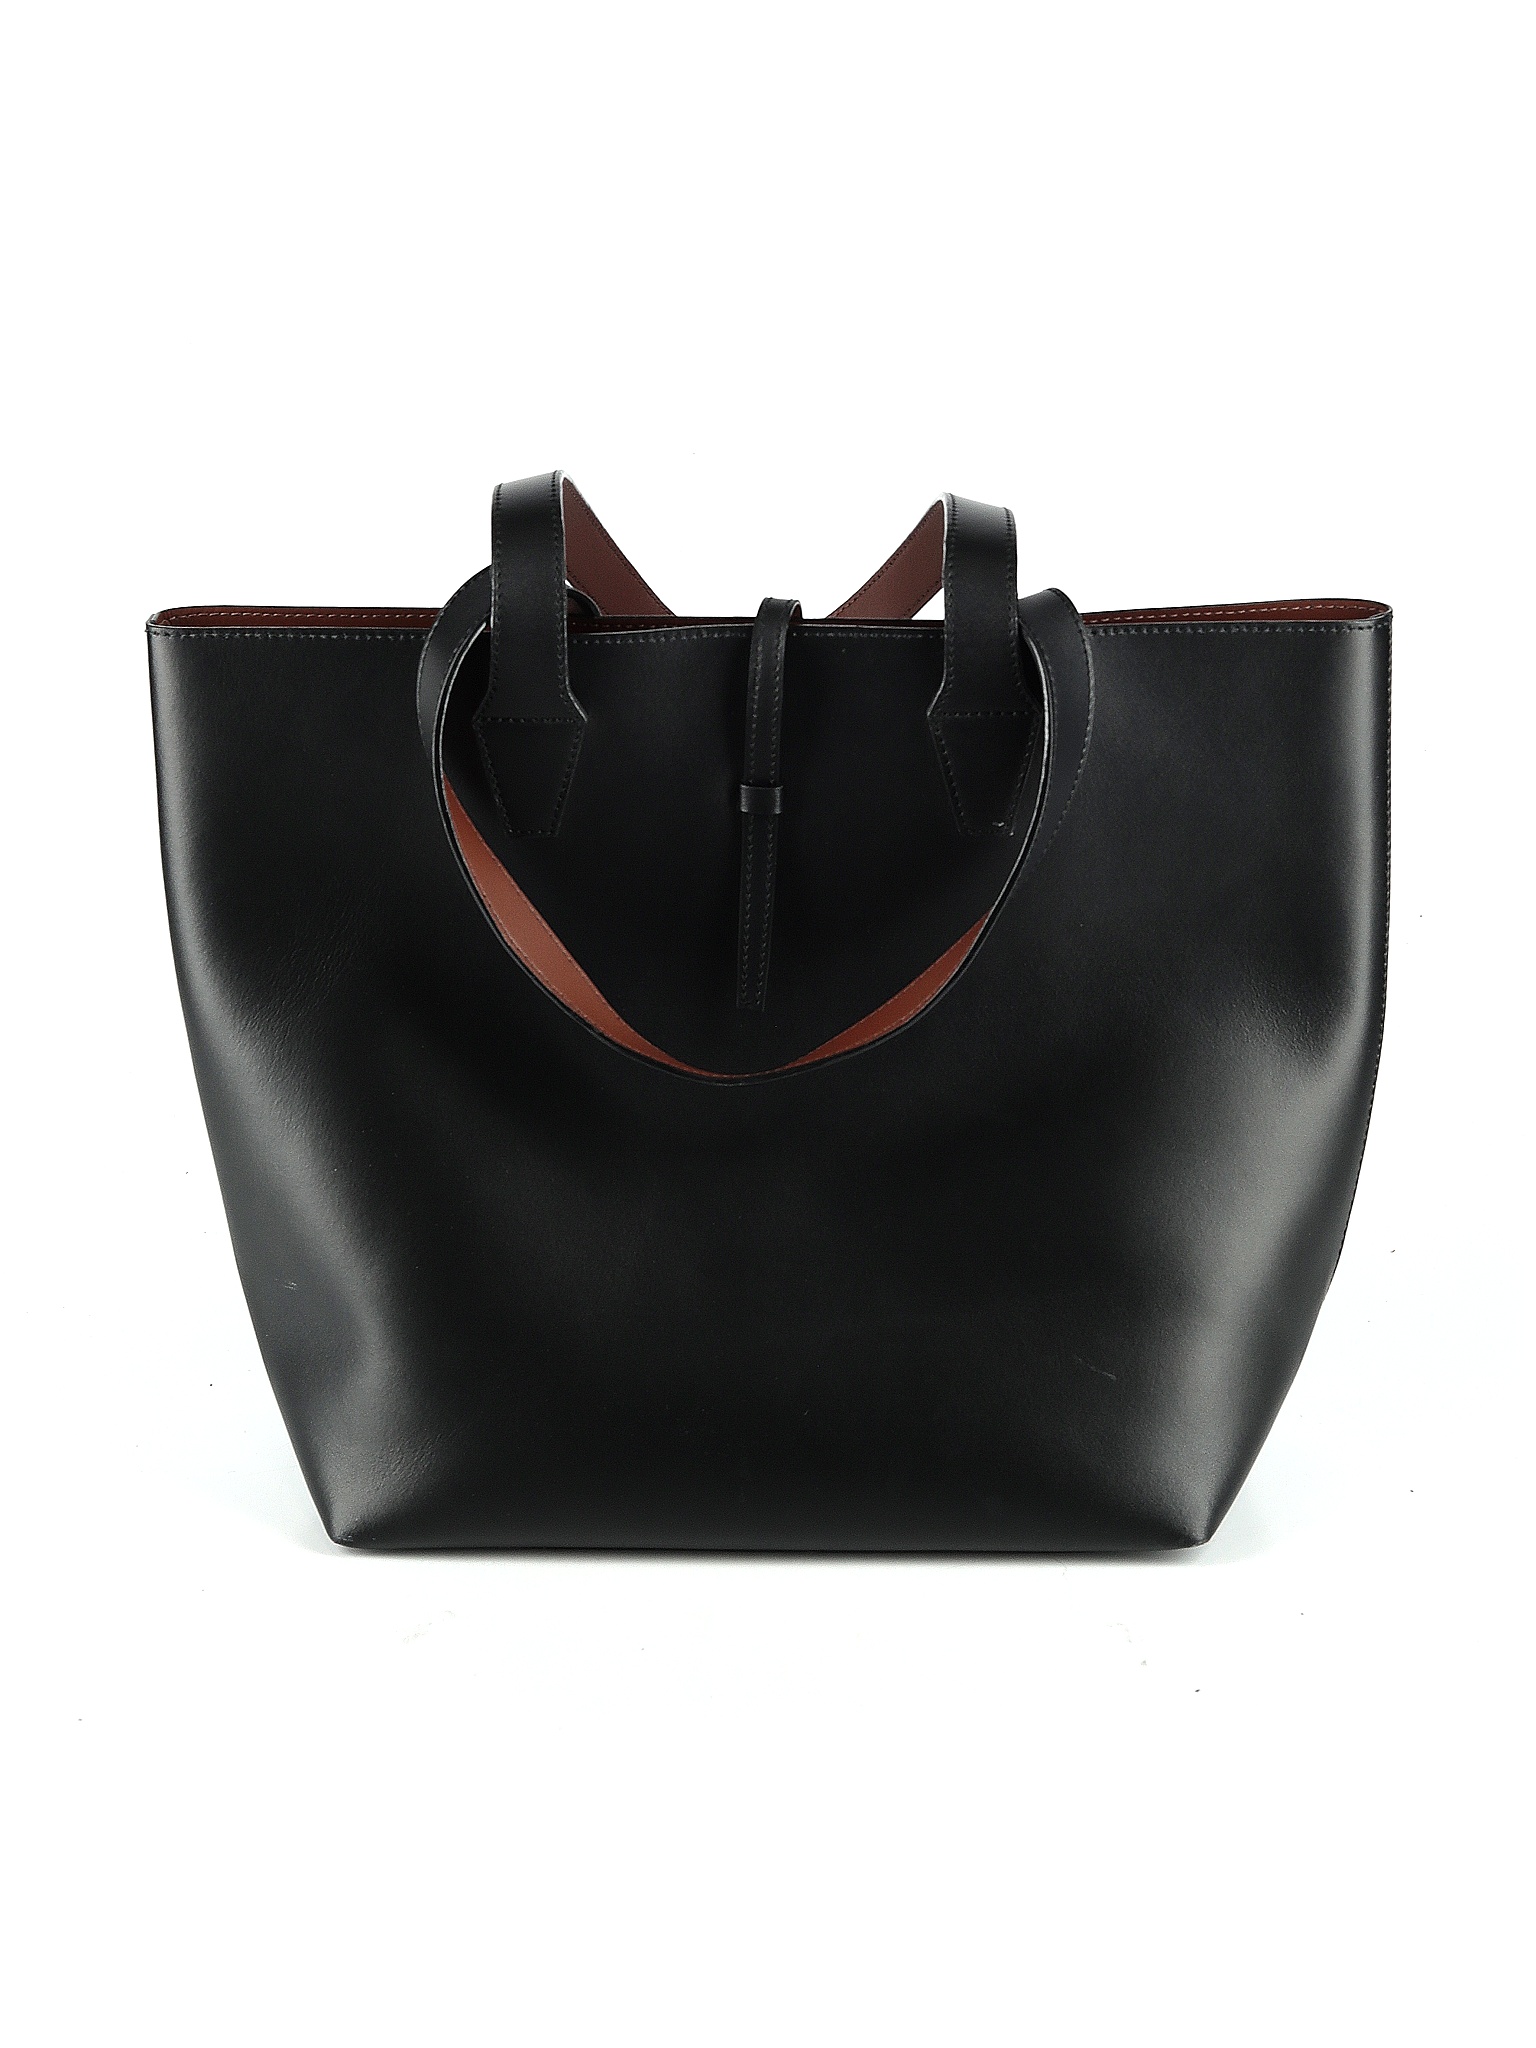 Barneys New York Handbags On Sale Up To 90% Off Retail | thredUP